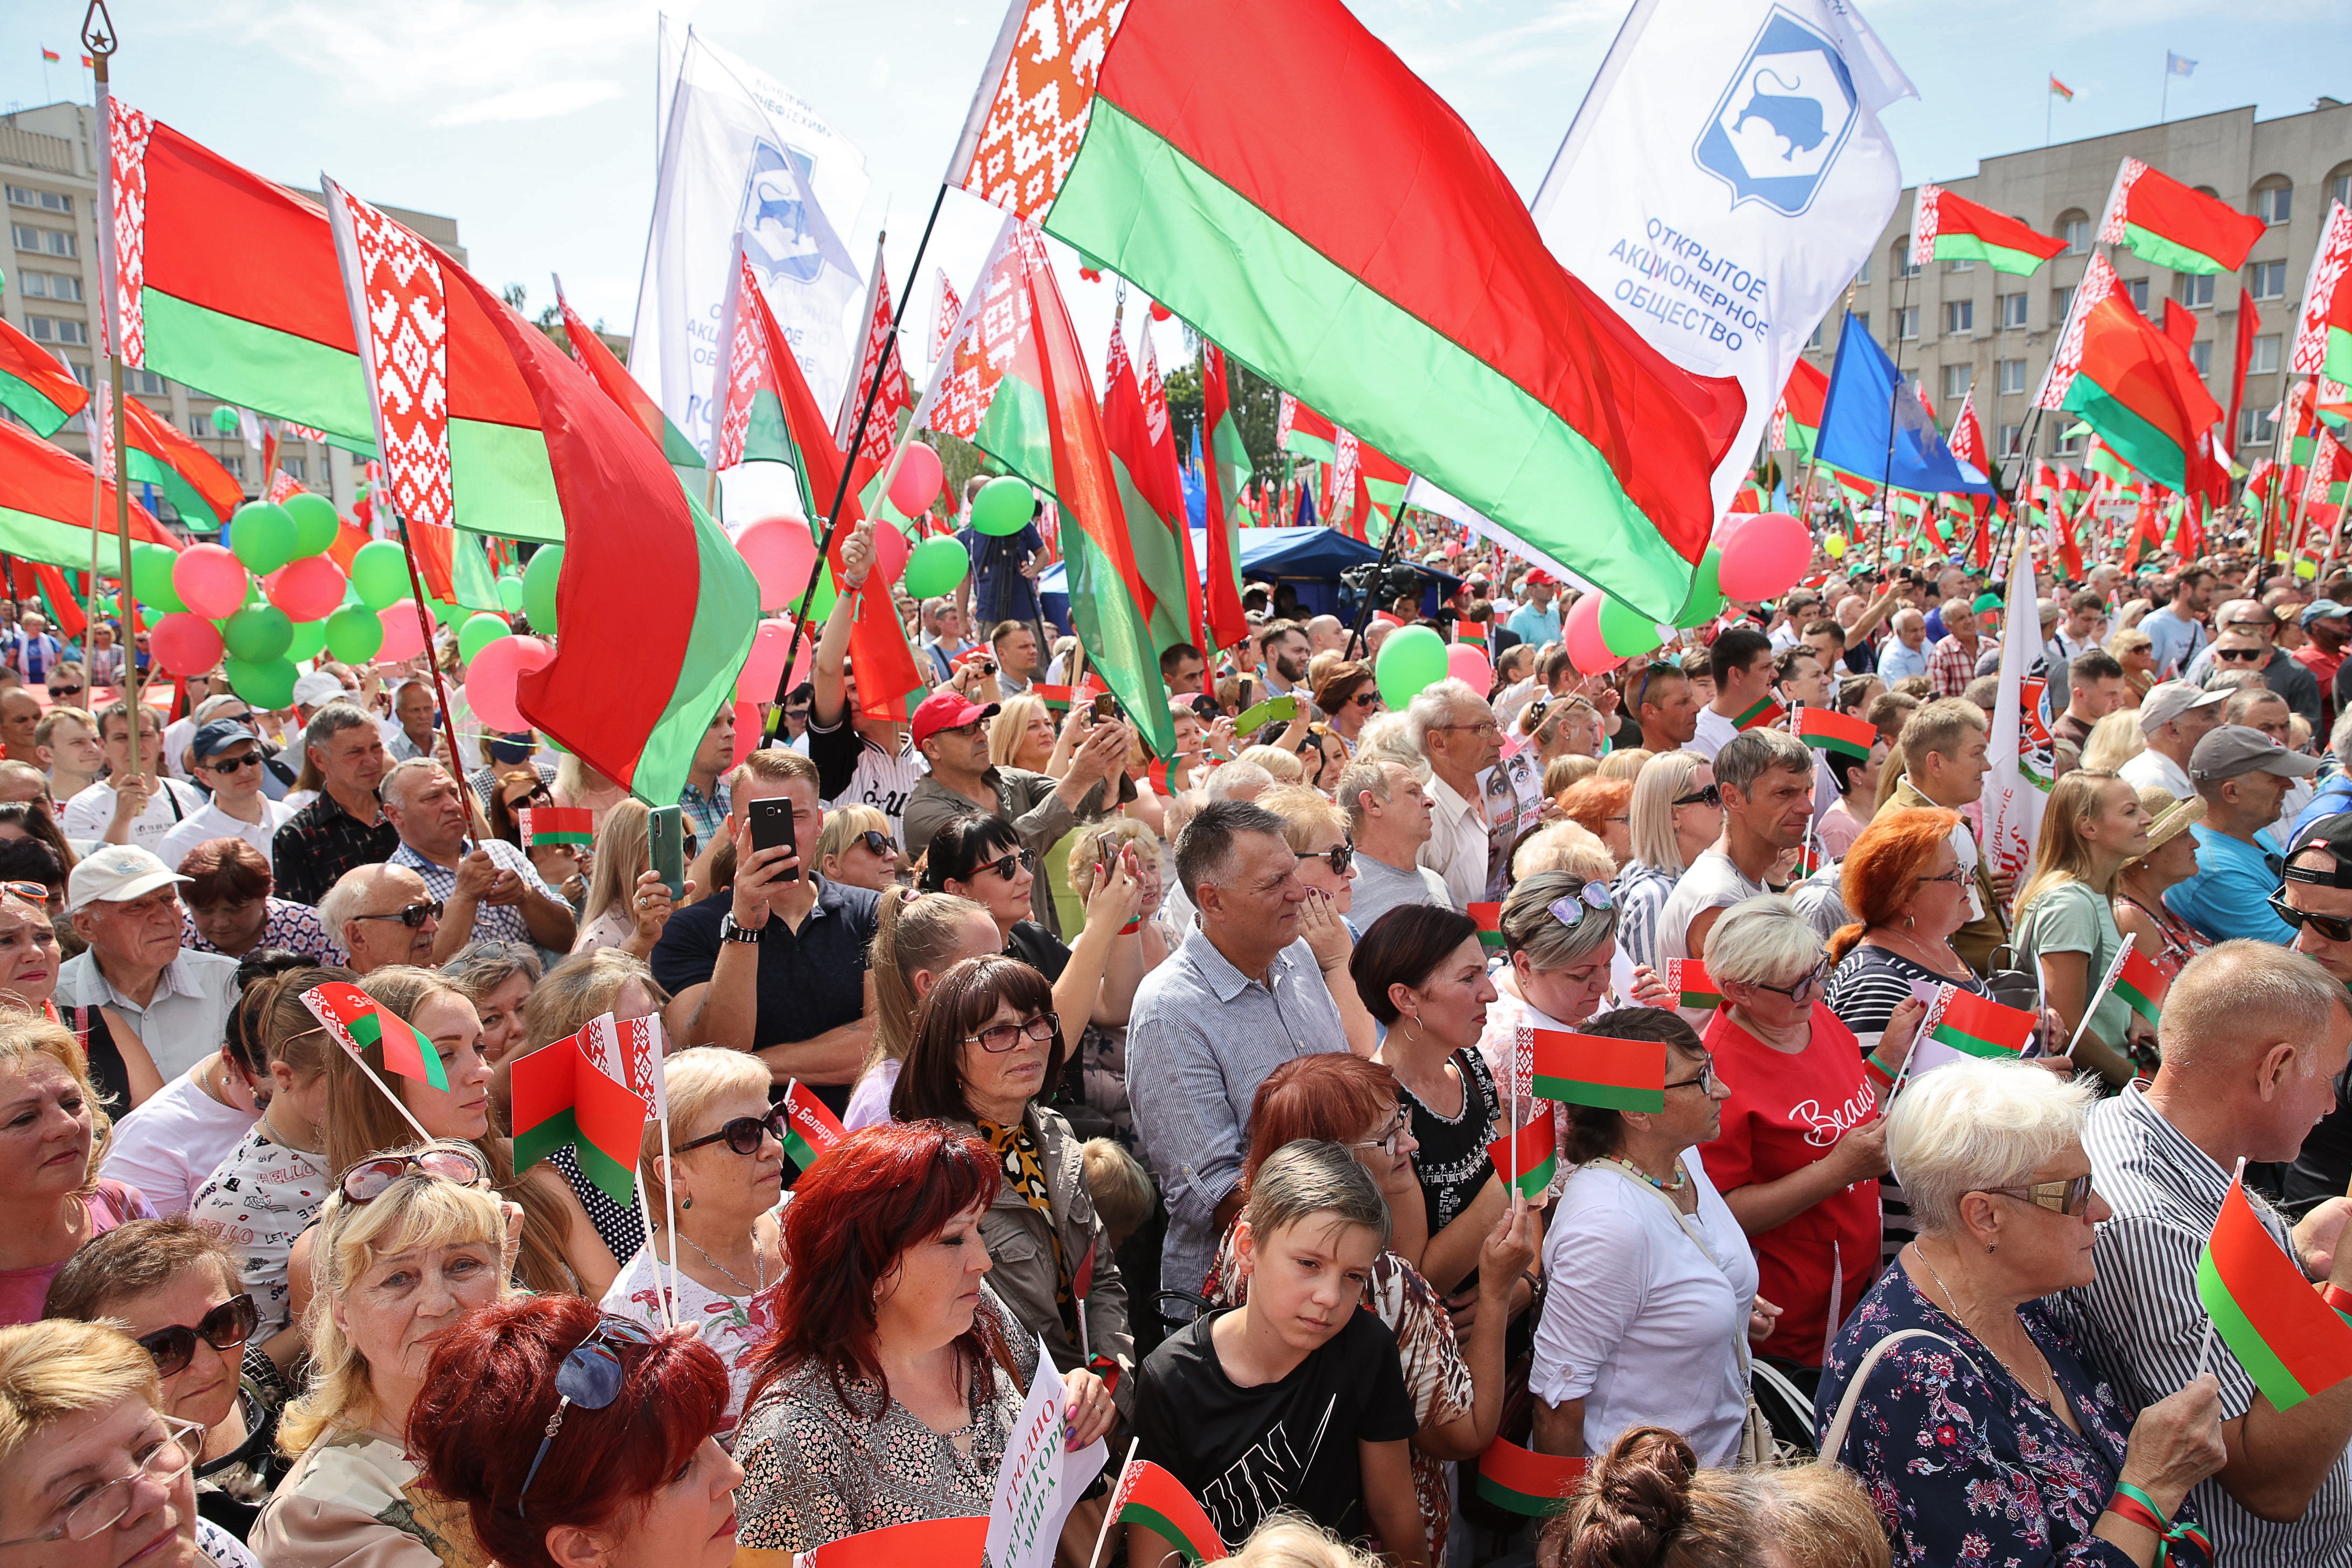 Massive demonstrations in Belarus put pressure on Lukashenko to step down